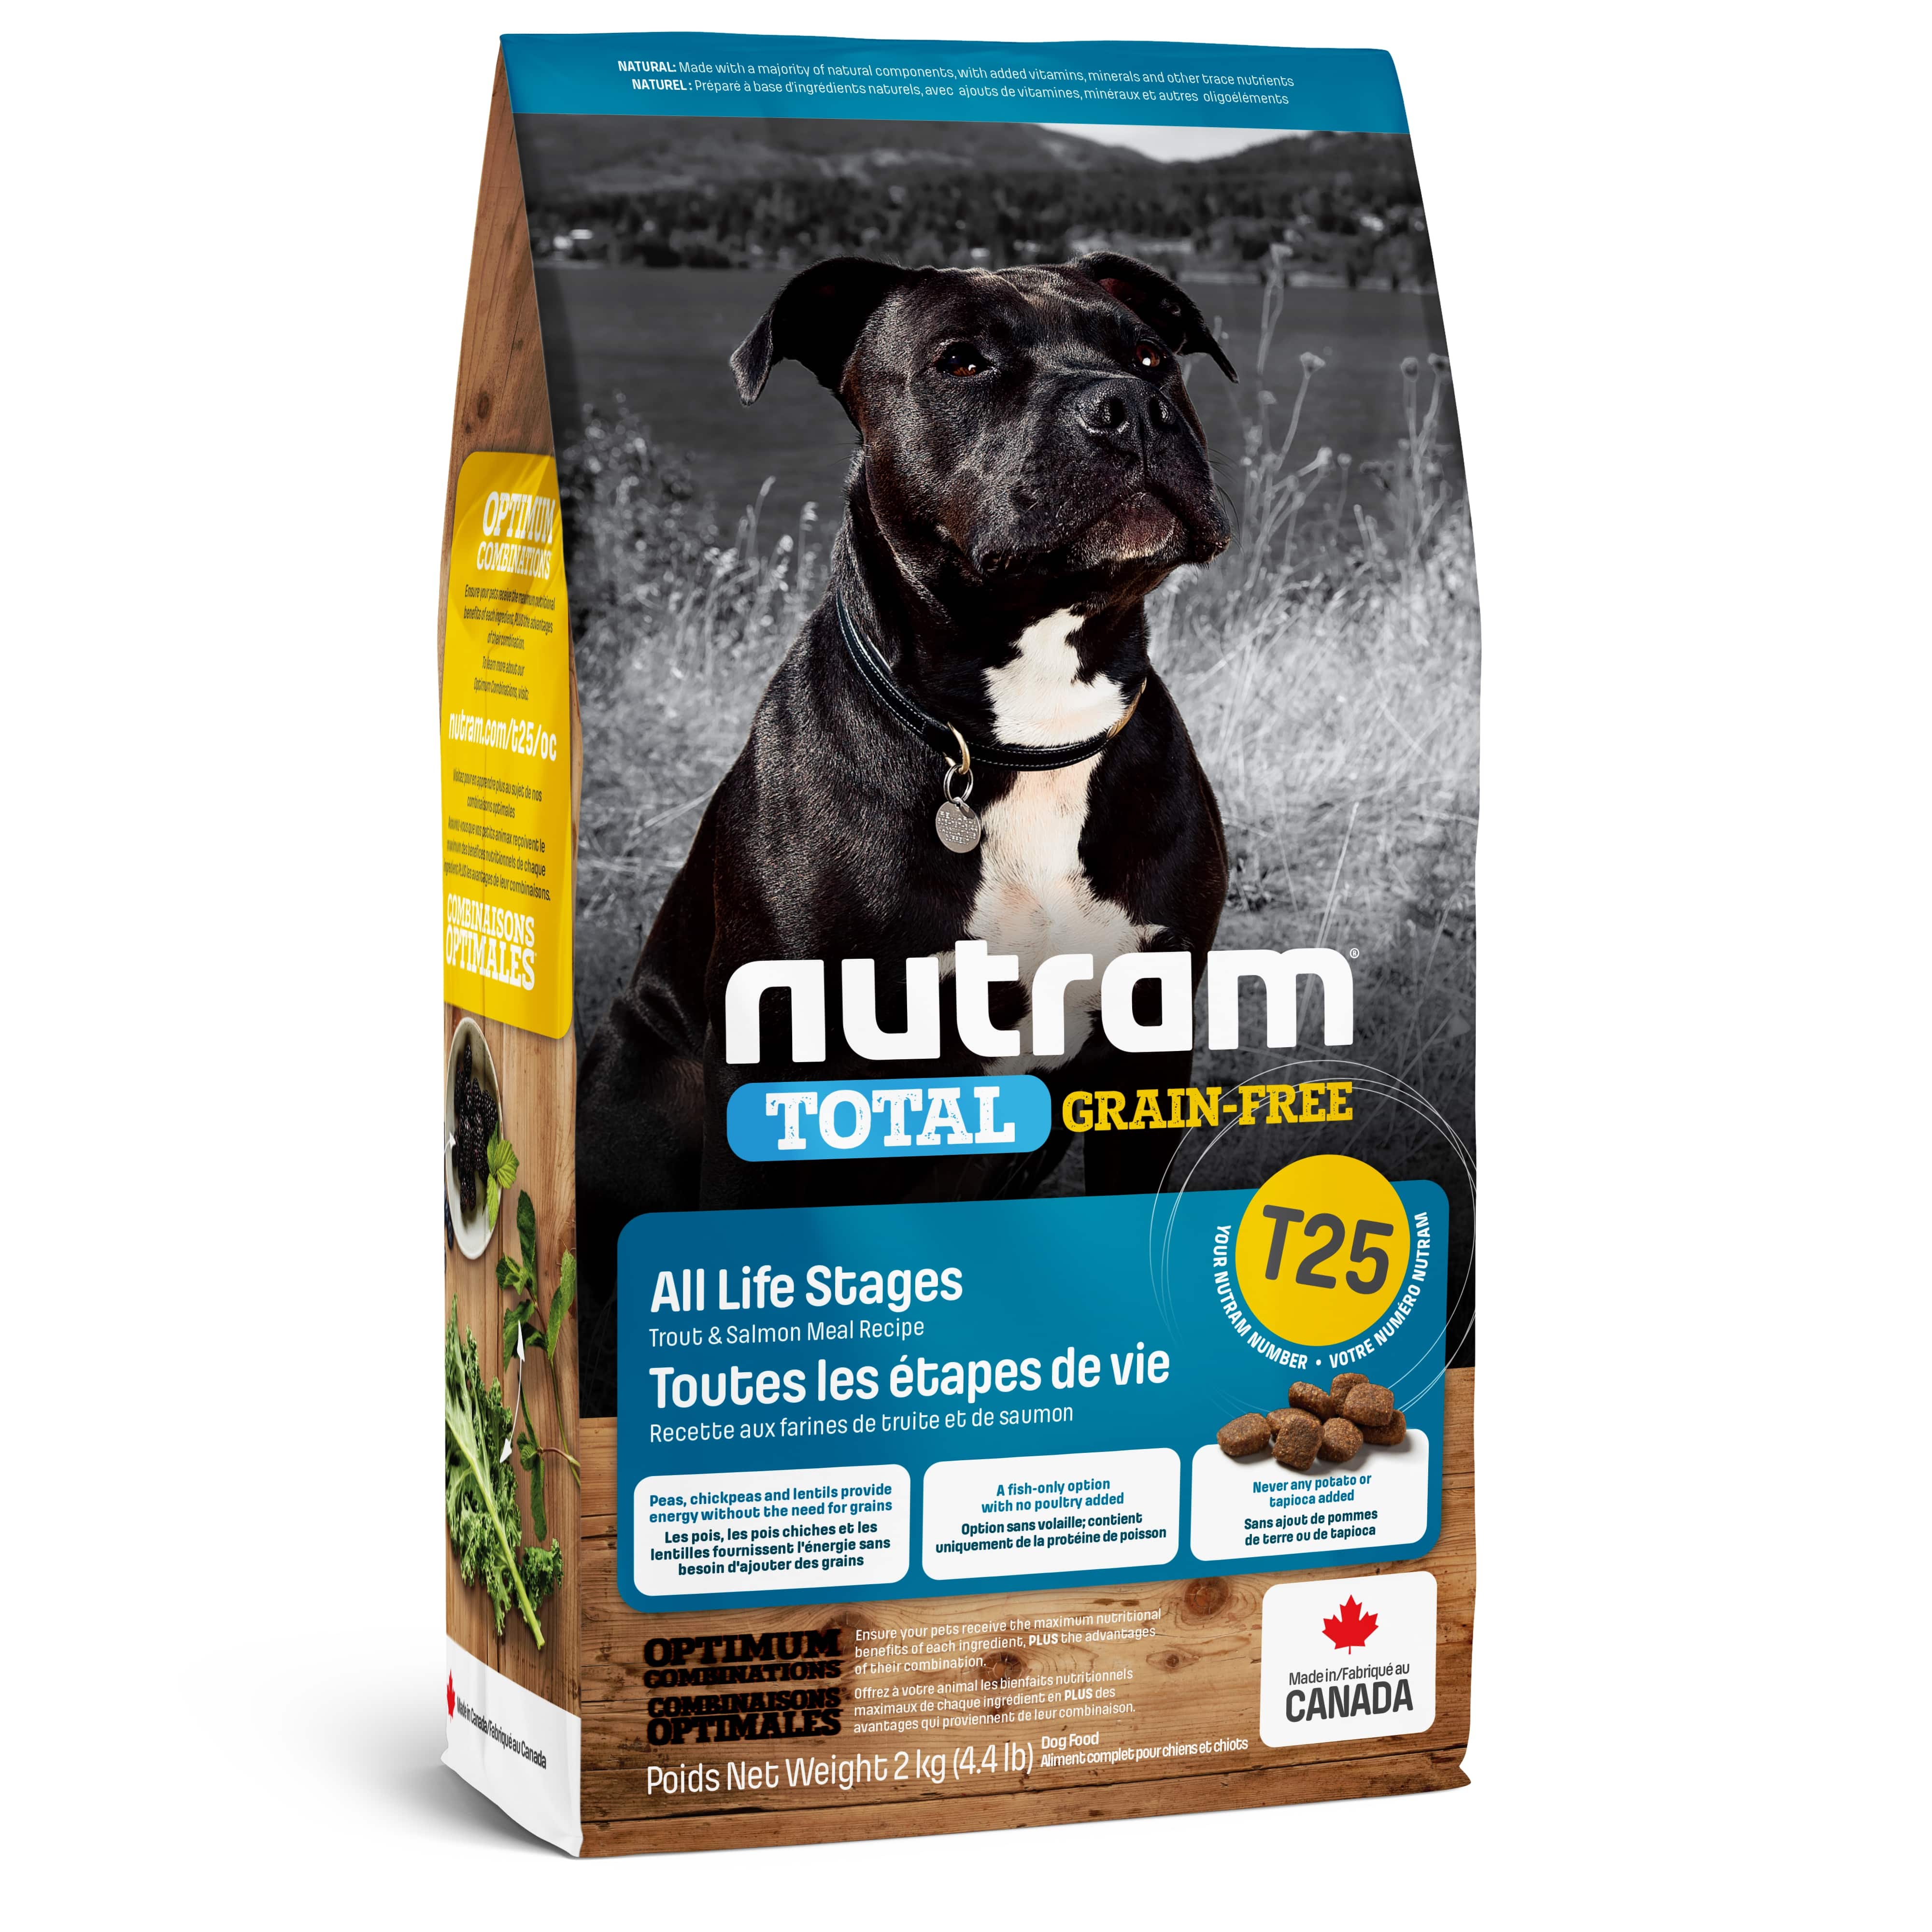  T25 Nutram Total Grain-Free® Trout & Salmon Dog Food